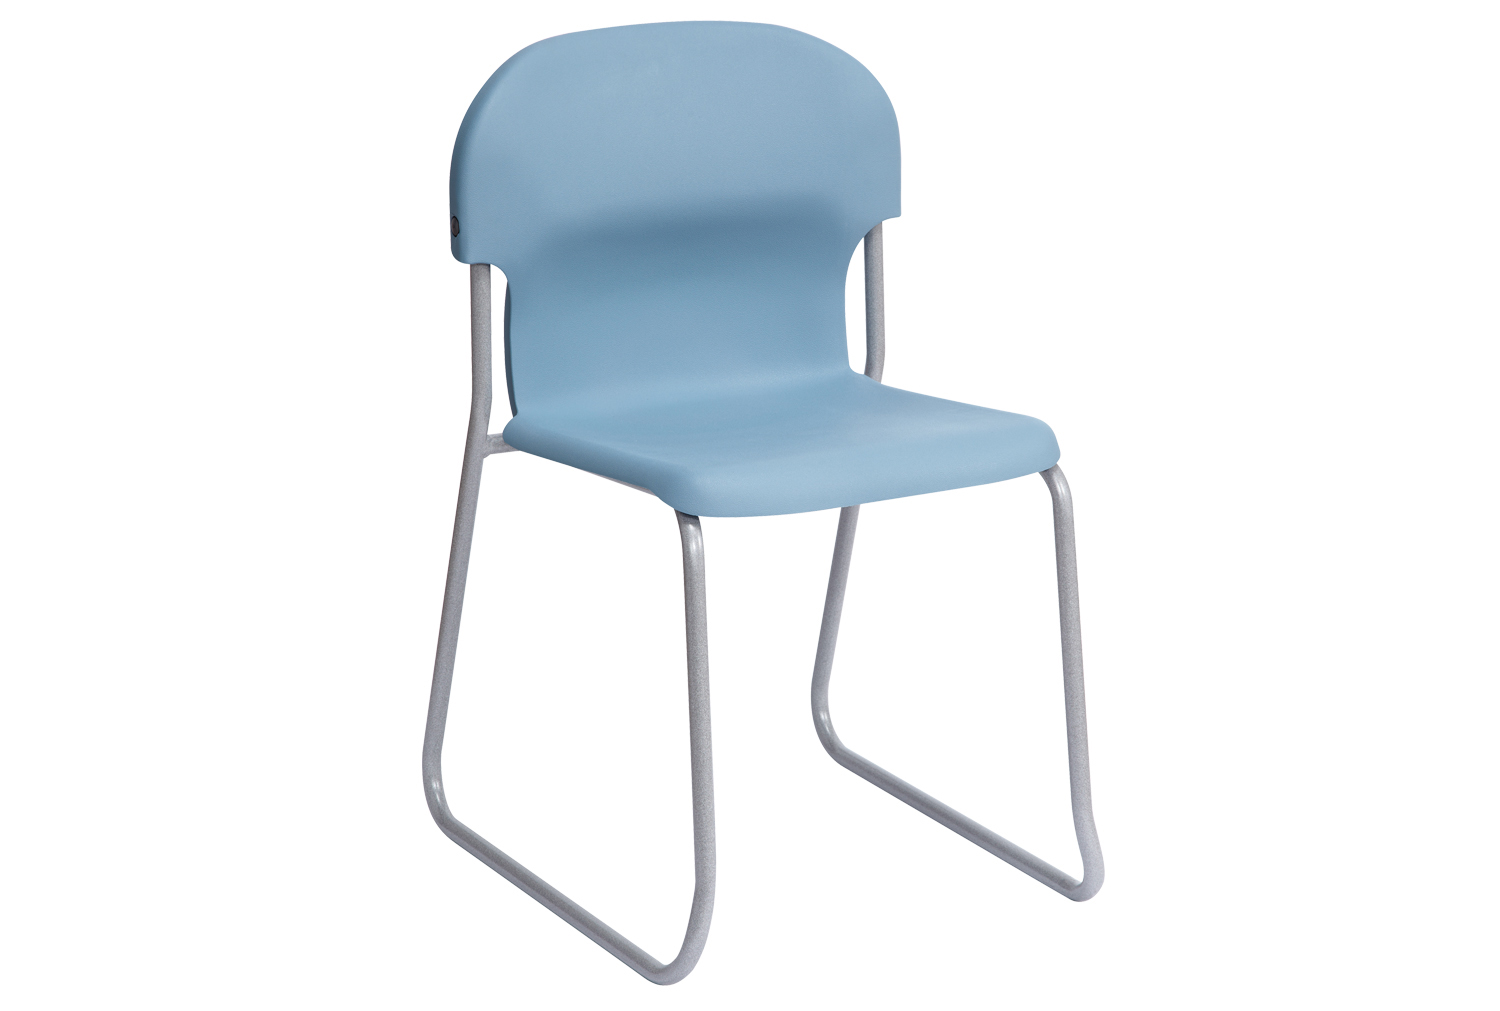 Qty 8 - Metalliform Chair 2000 Skid Base School Classroom Chair, 43h, Charcoal Frame, Blue